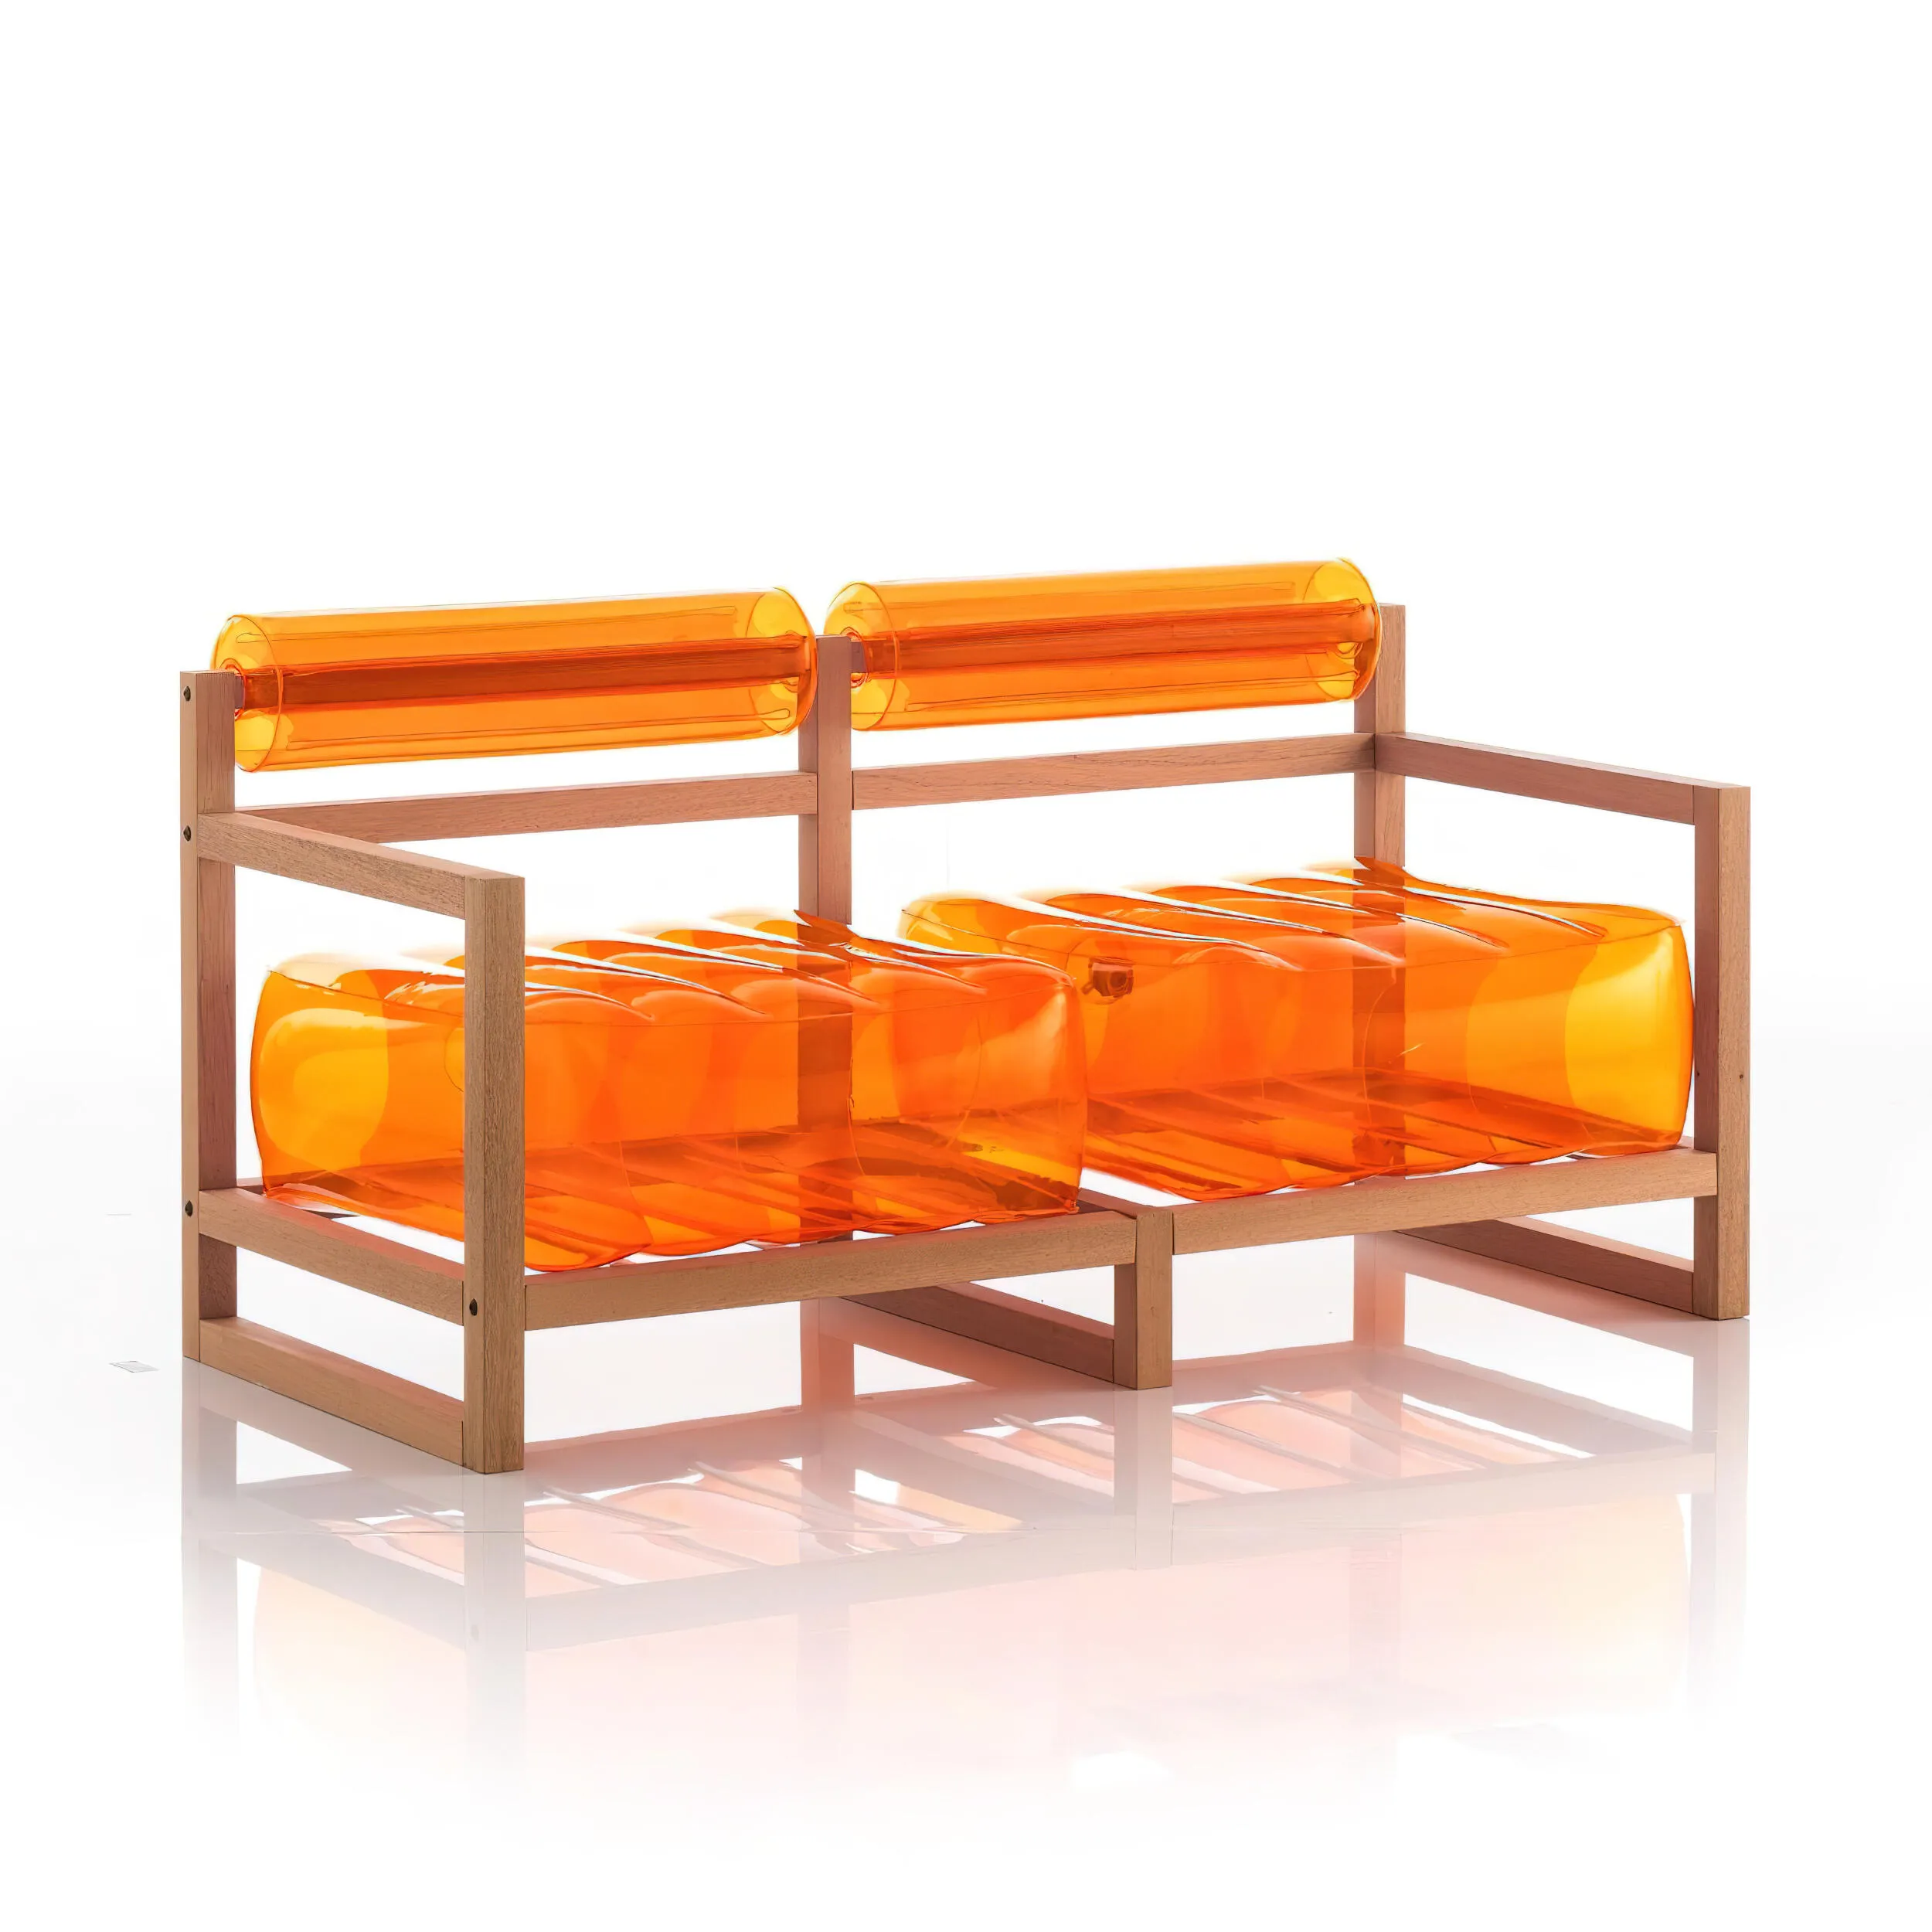 divano Yoko eko struttura in legno naturale, dimensioni 62x191xH70 cm peso 18,7 kg, seduta gonfiabile in TPU colore arancio